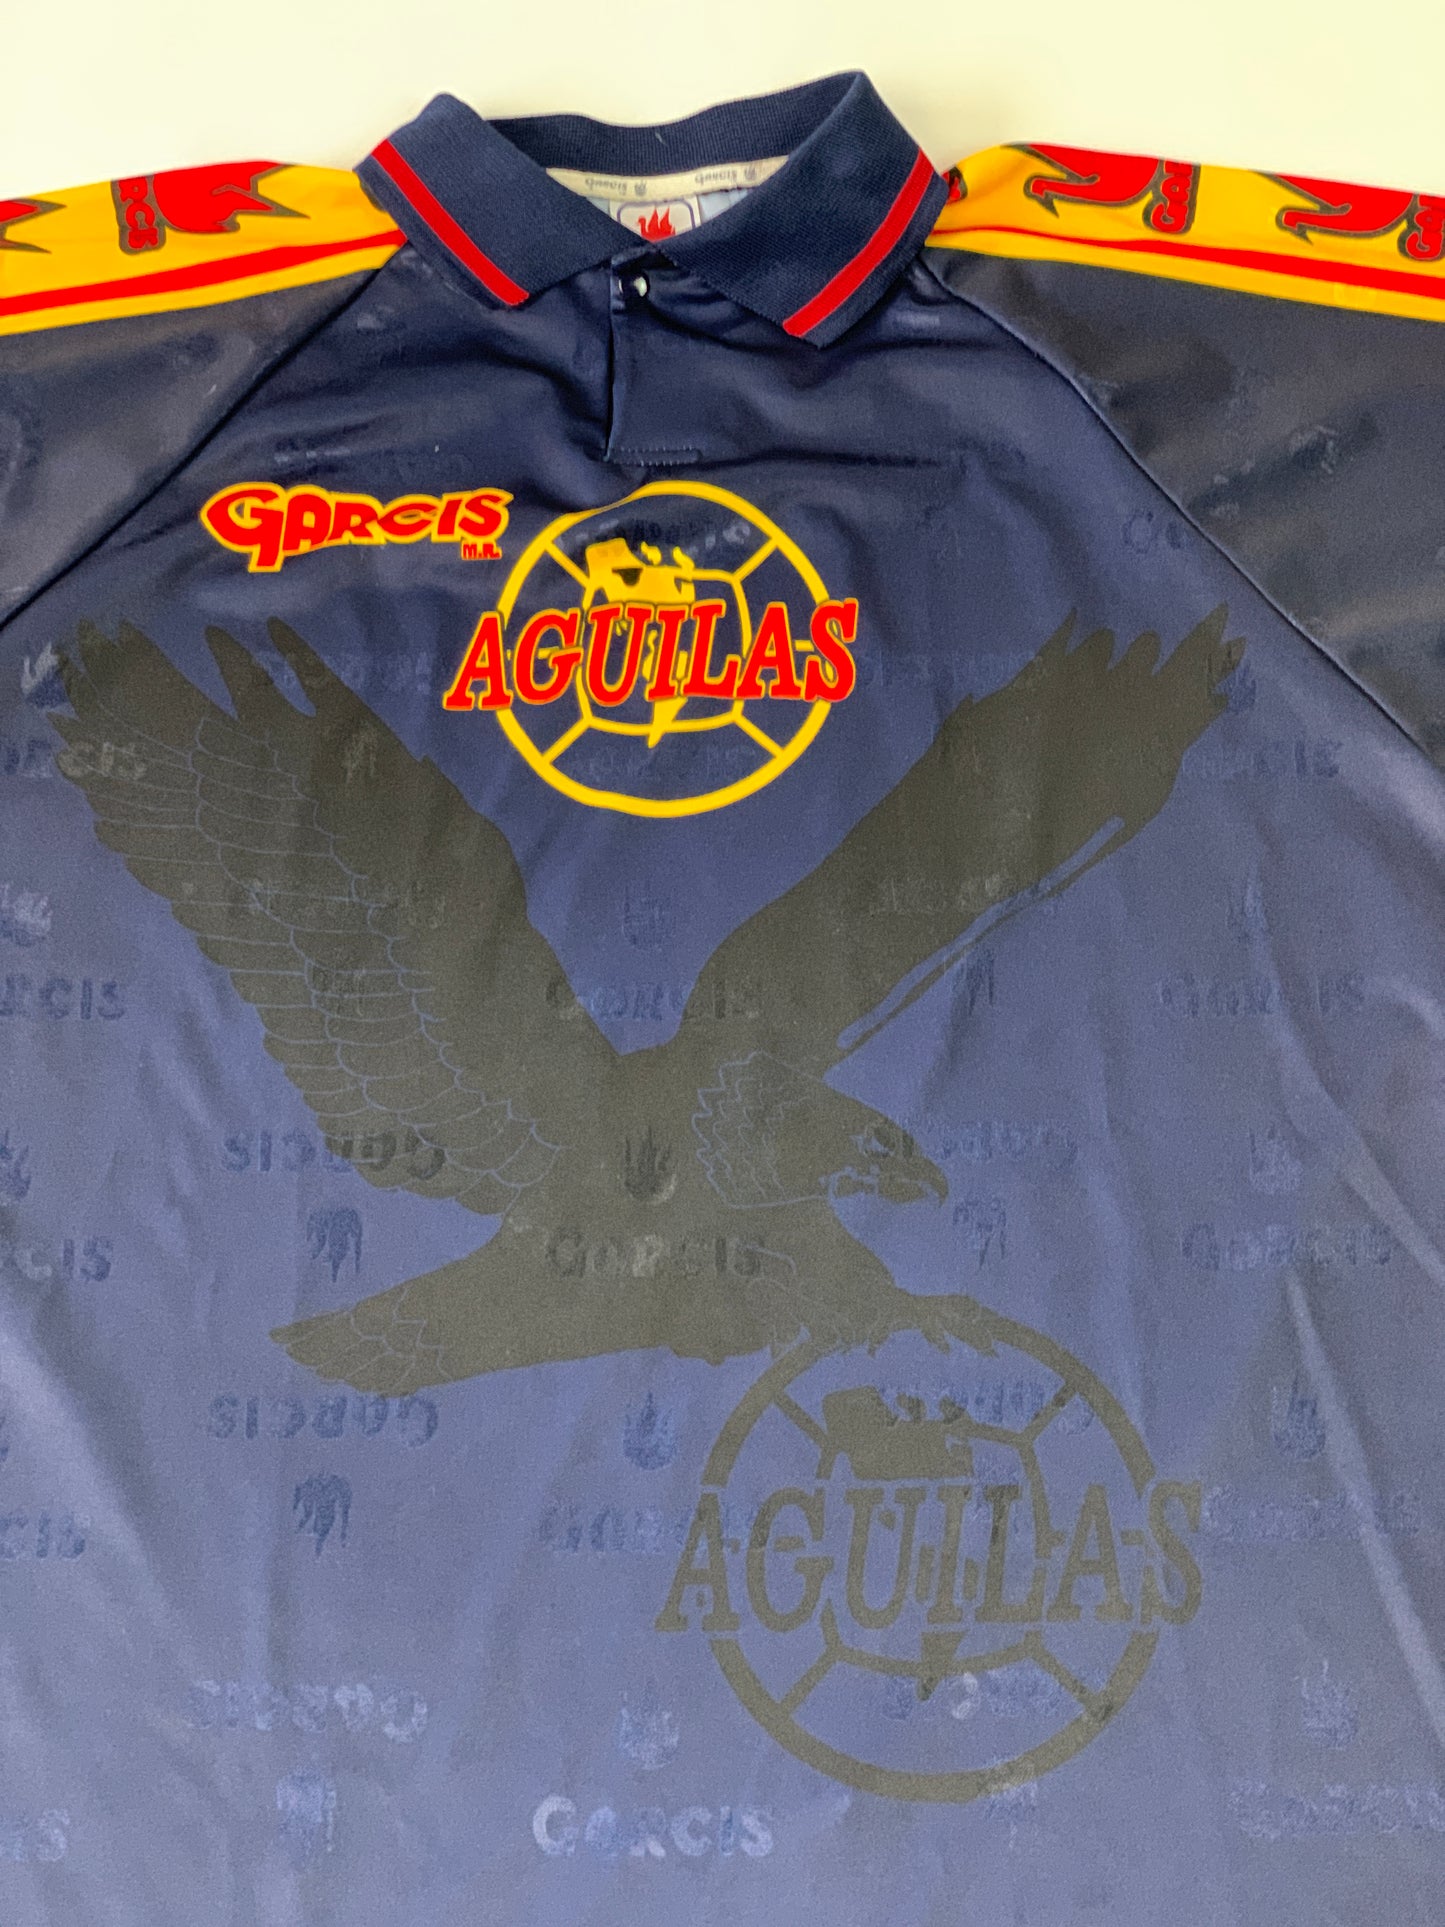 Jersey Garcis Aguilas Vintage - XL